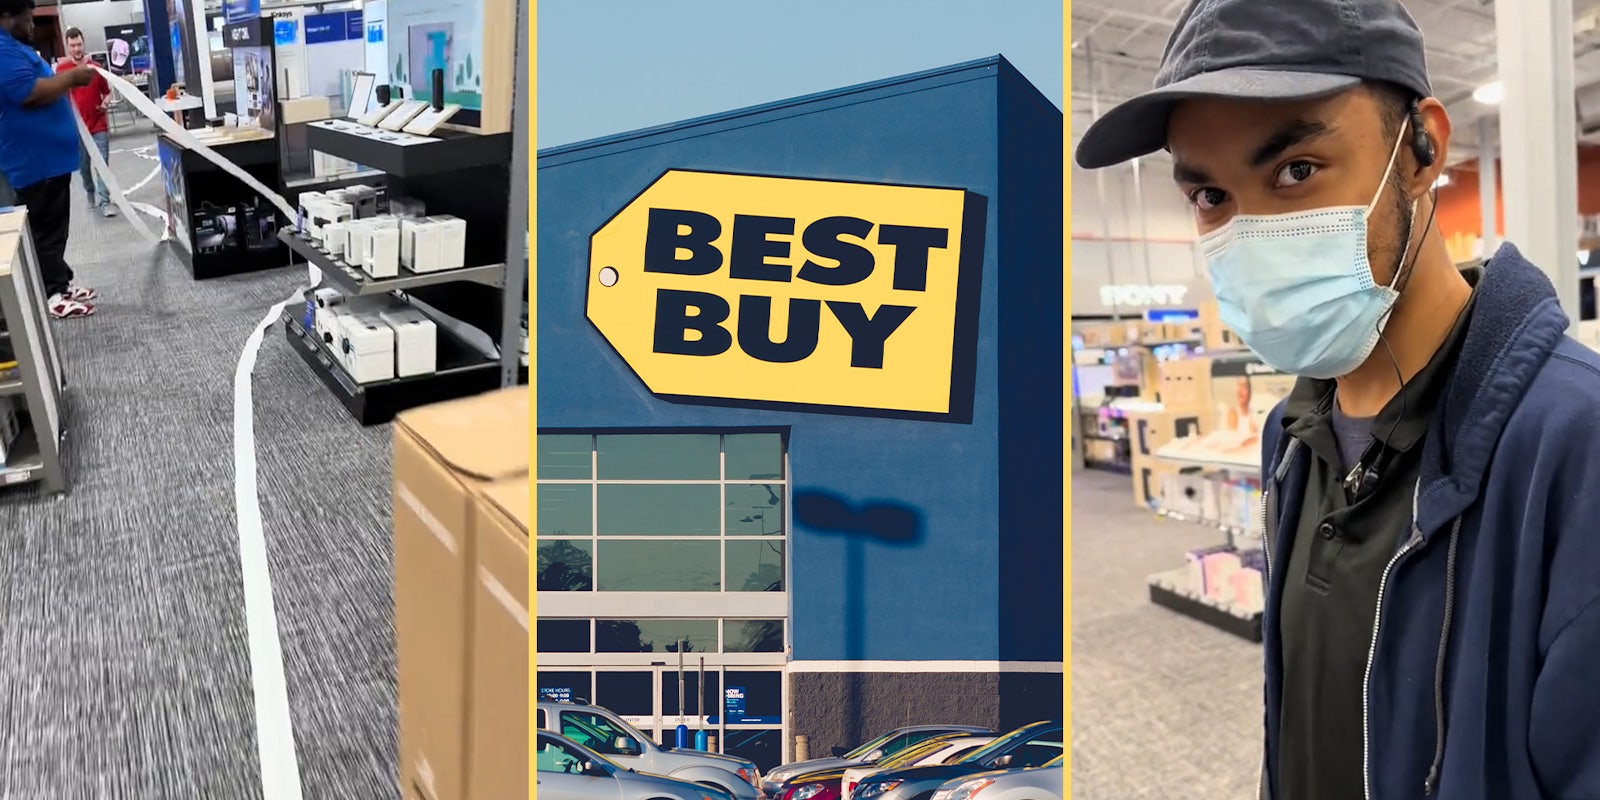 Best Buy worker exposes receipt of customer who spent over $12,000